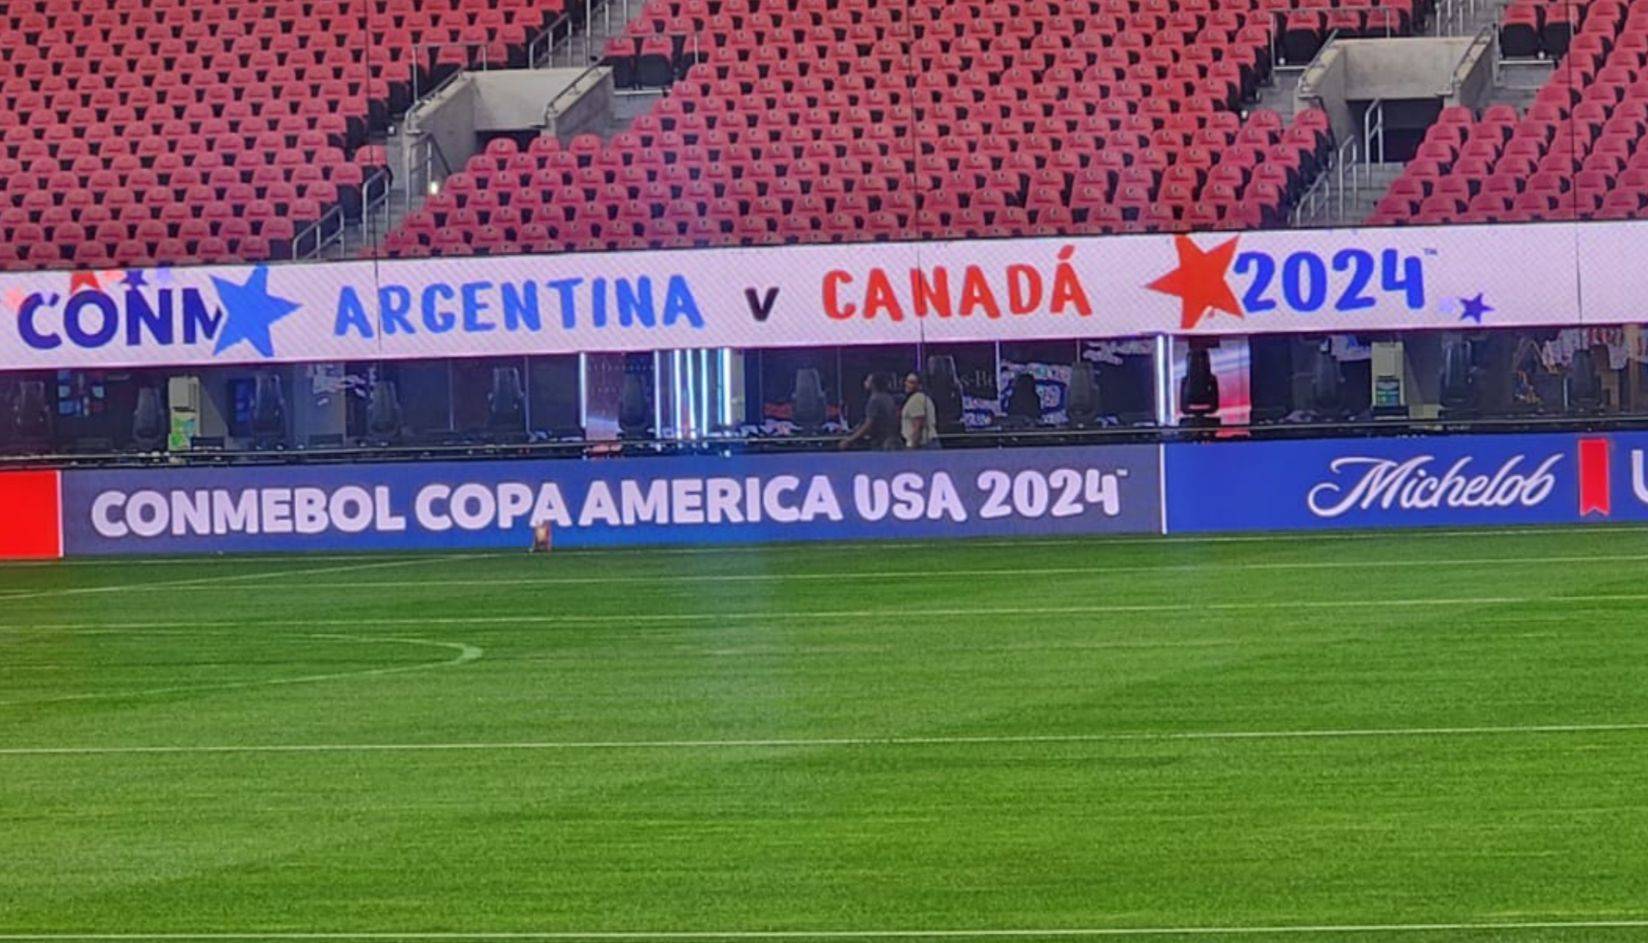 Romero Criticizes US Pitch: 'Sad' to Play Copa América on Such Fields